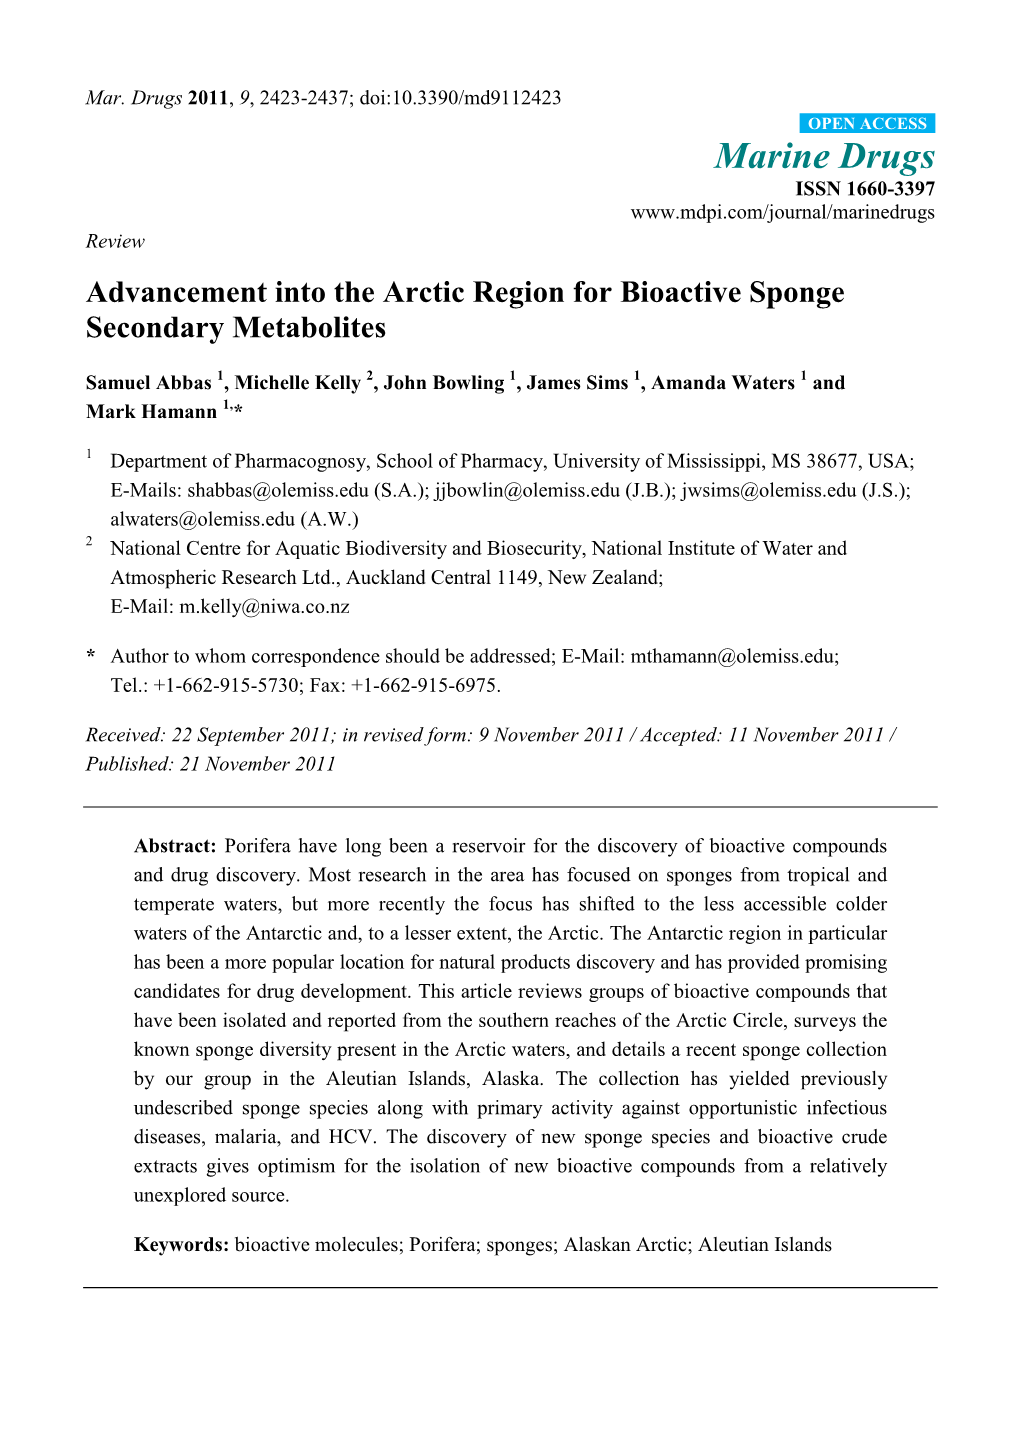 Advancement Into the Arctic Region for Bioactive Sponge Secondary Metabolites